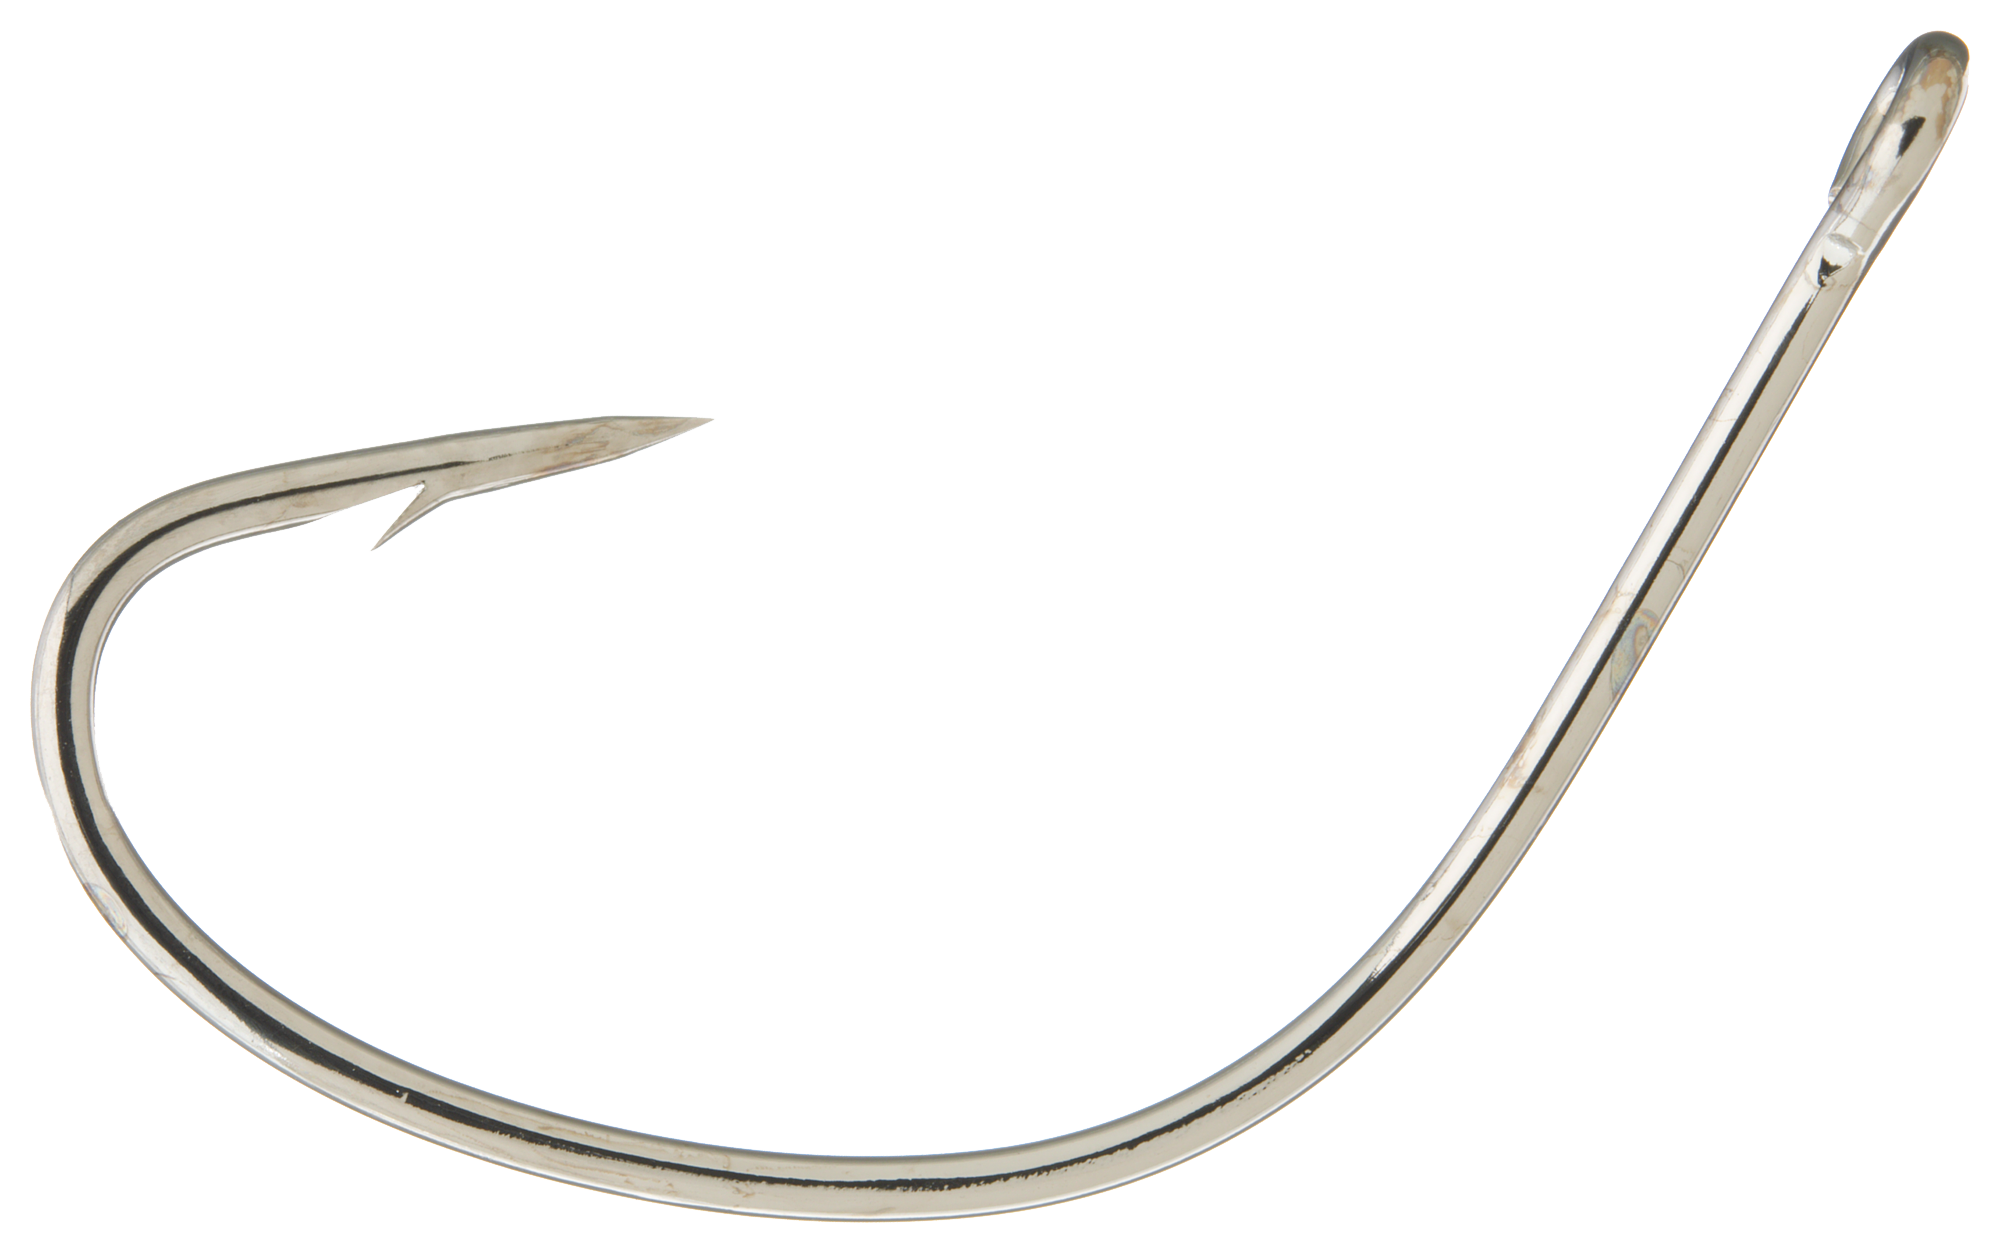 Eagle Claw Lazer Kahle Offset, Size 2/0, Nickel